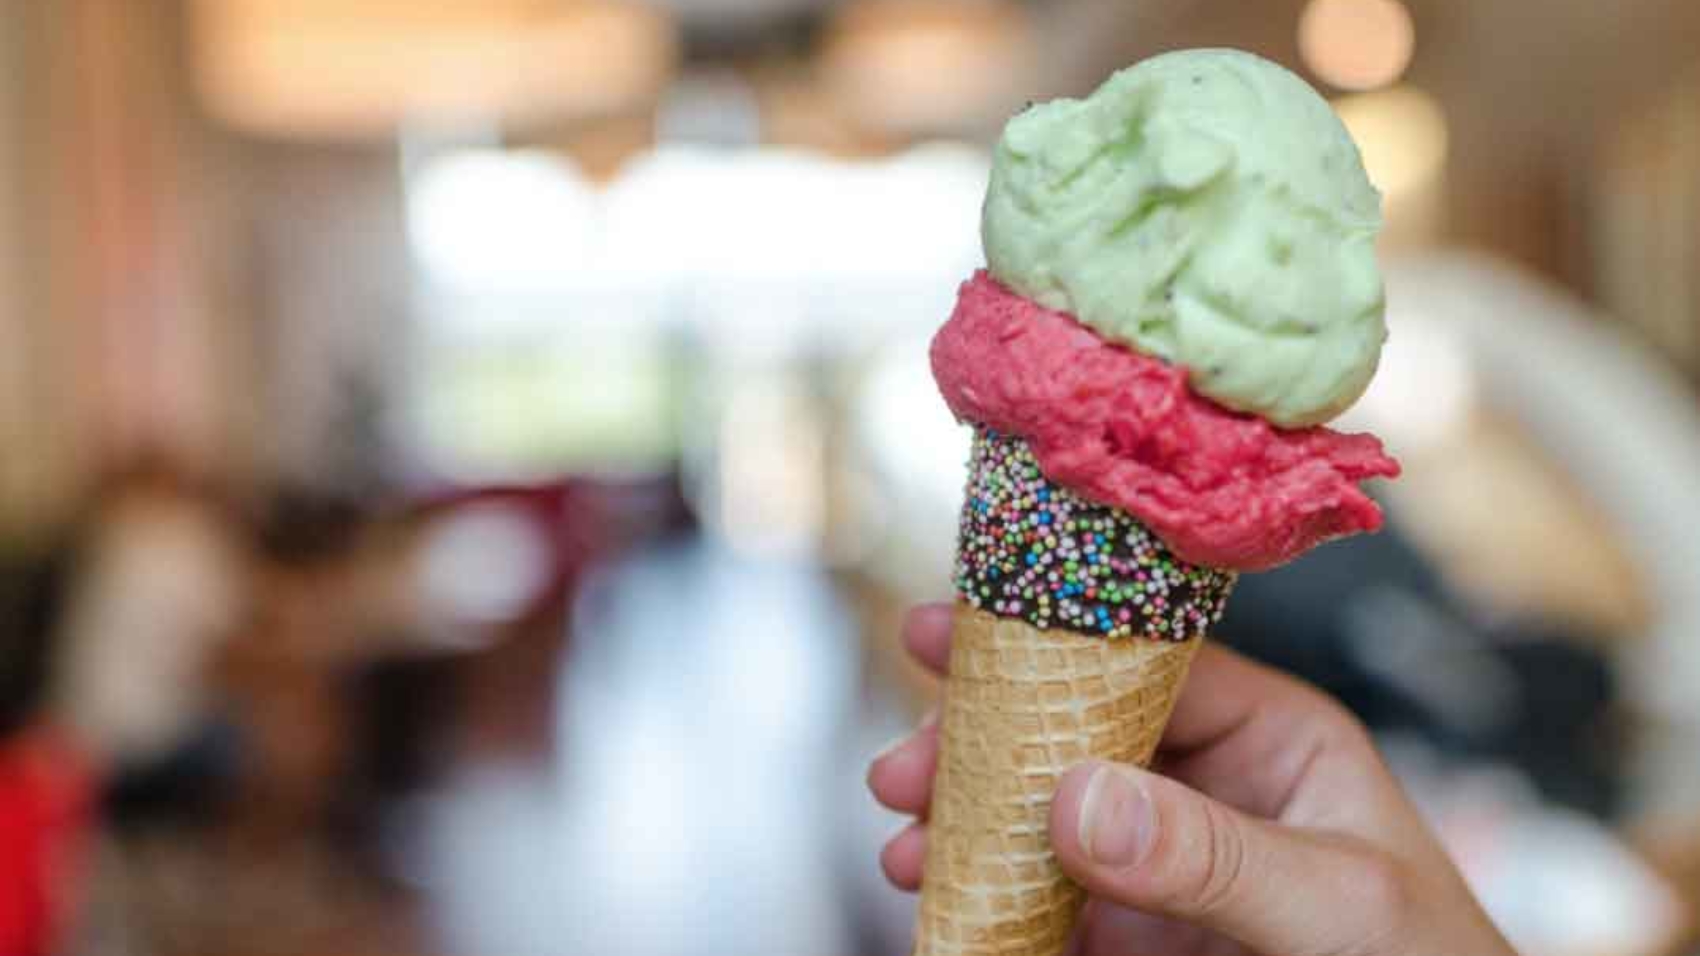 Self-Licking Ice Cream Resize